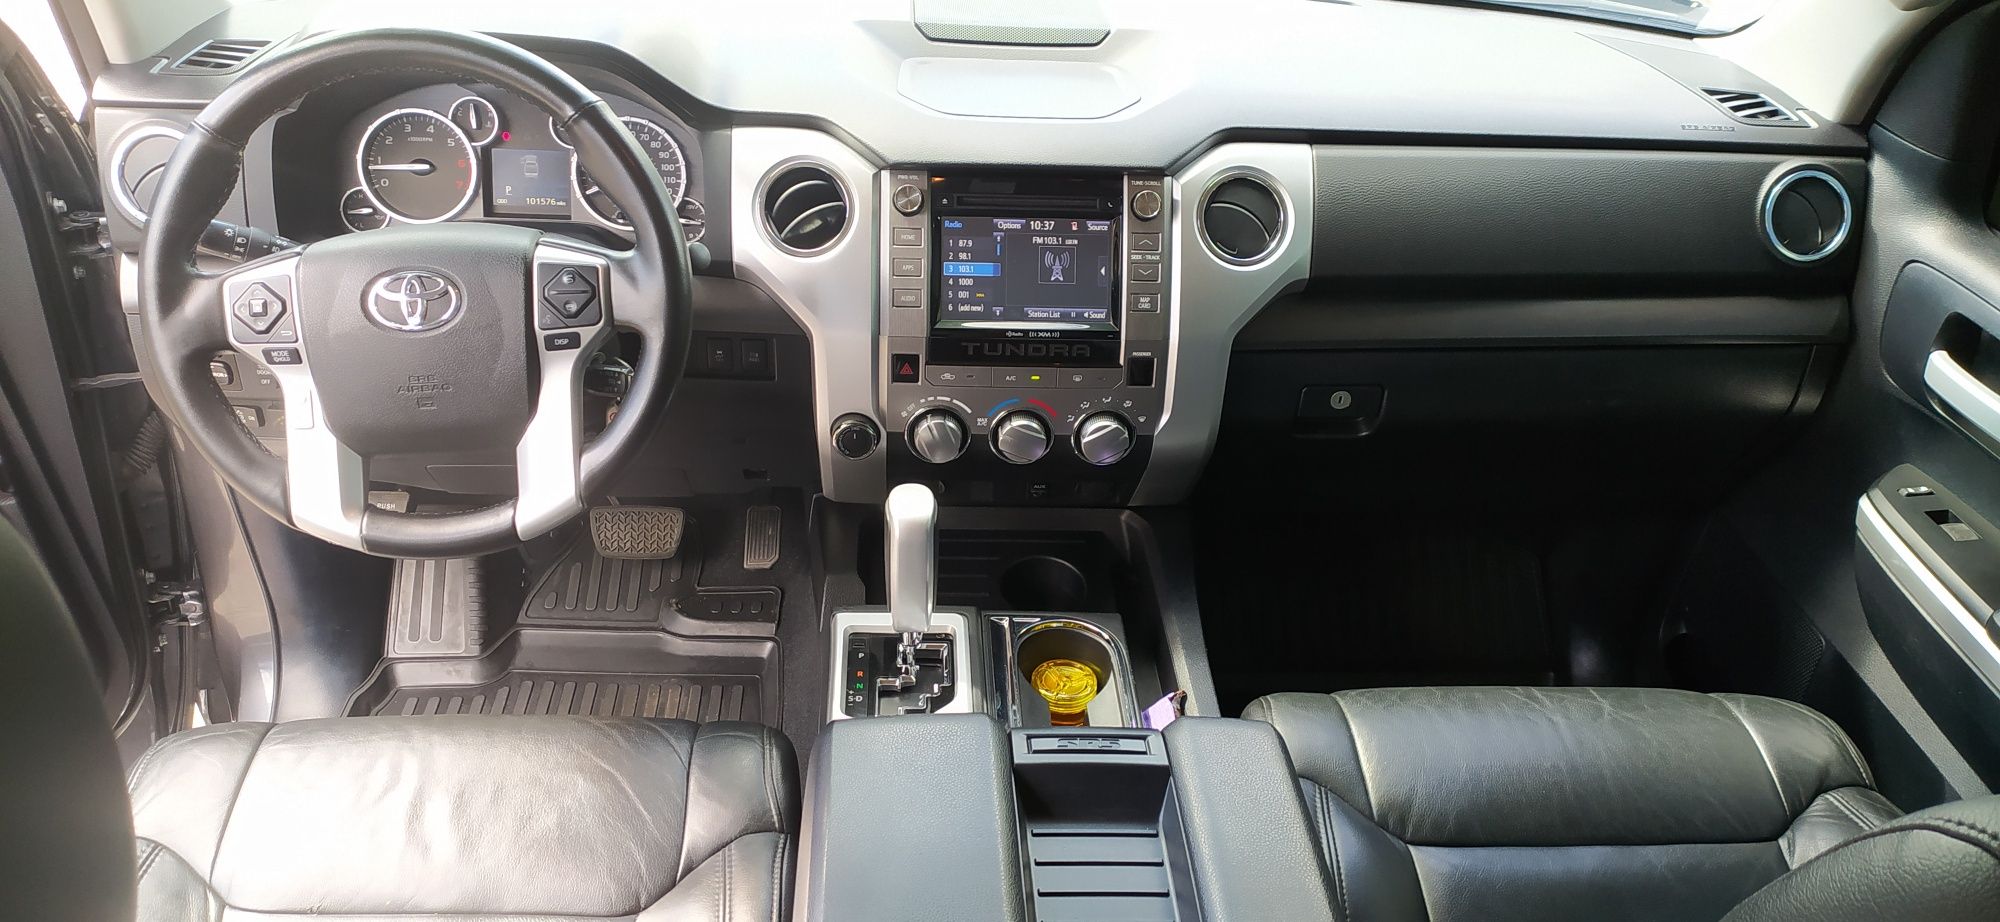 Toyota Tundra CrewMax 2014 4x4